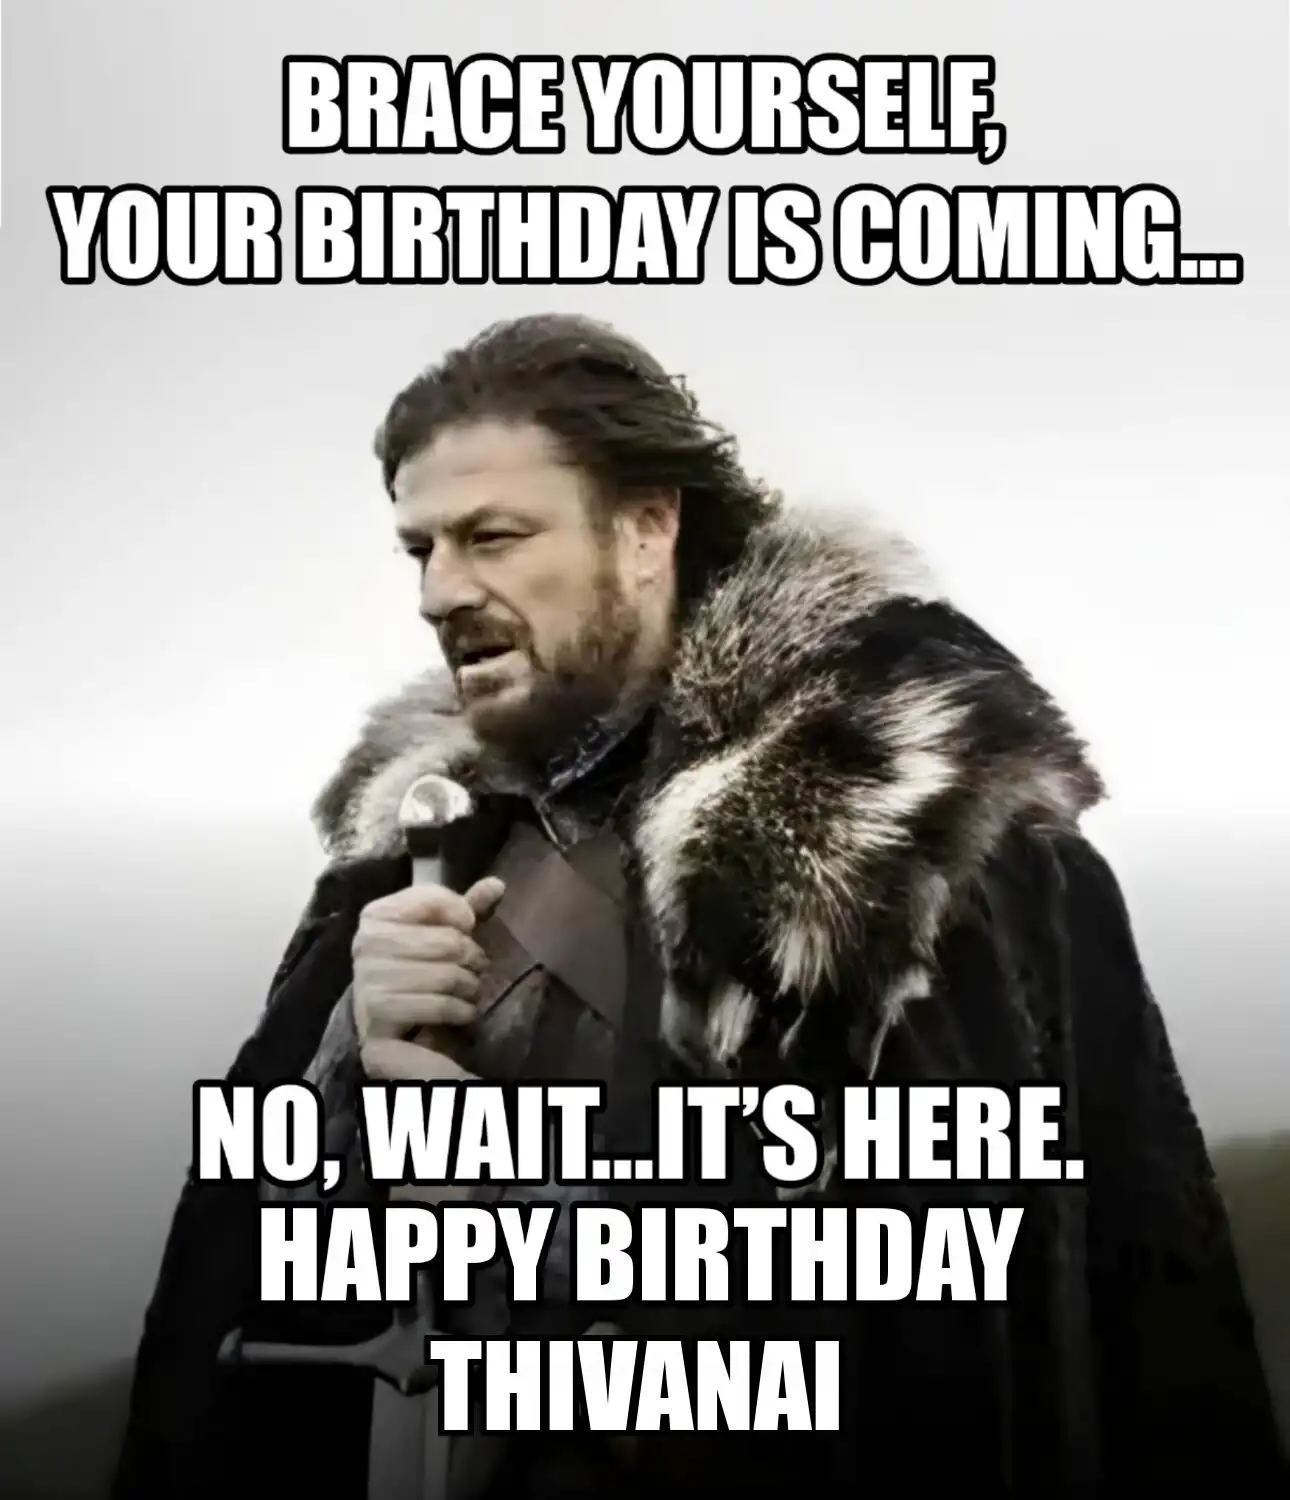 Happy Birthday Thivanai Brace Yourself Your Birthday Is Coming Meme